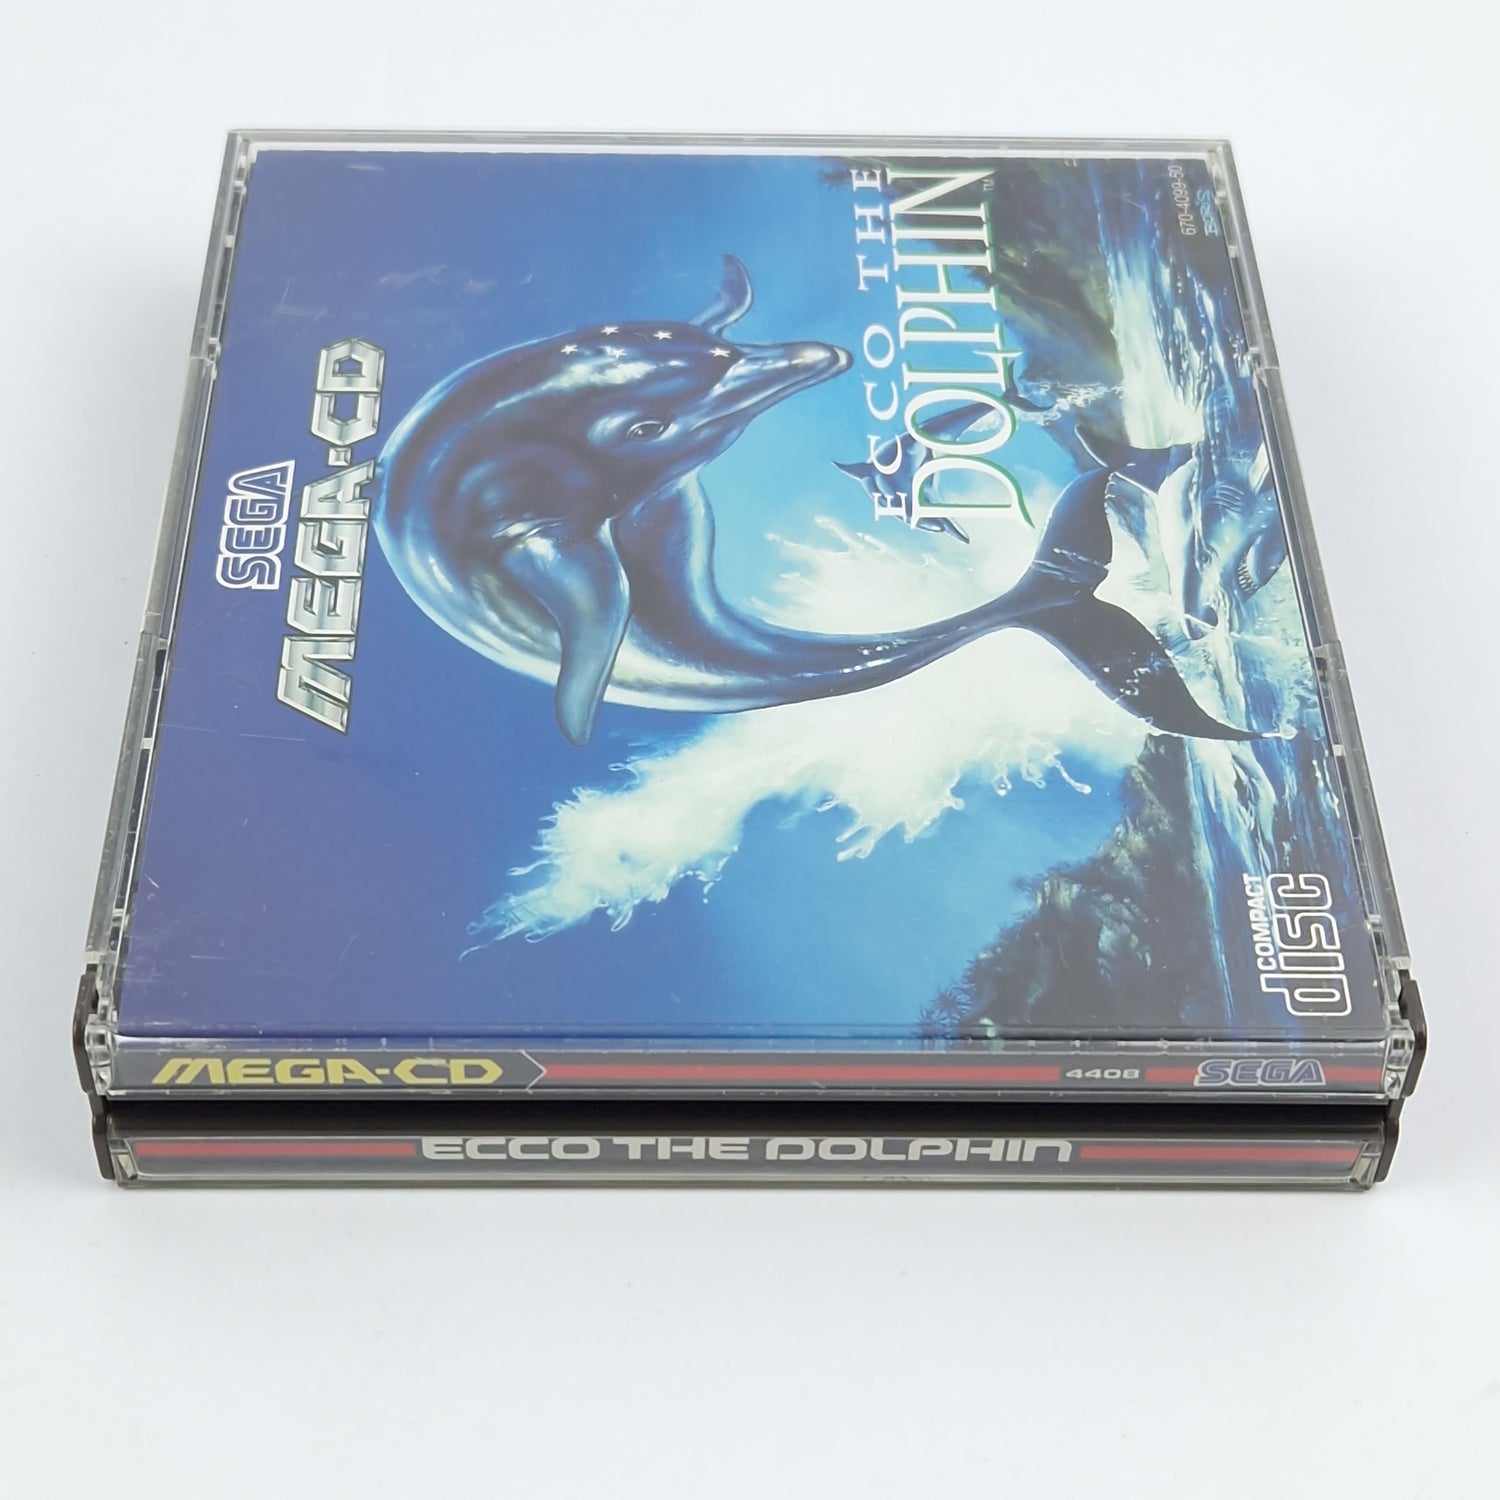 Sega Mega CD Game: Ecco The Dolphin - CD Instructions OVP / MCD PAL DISK Game